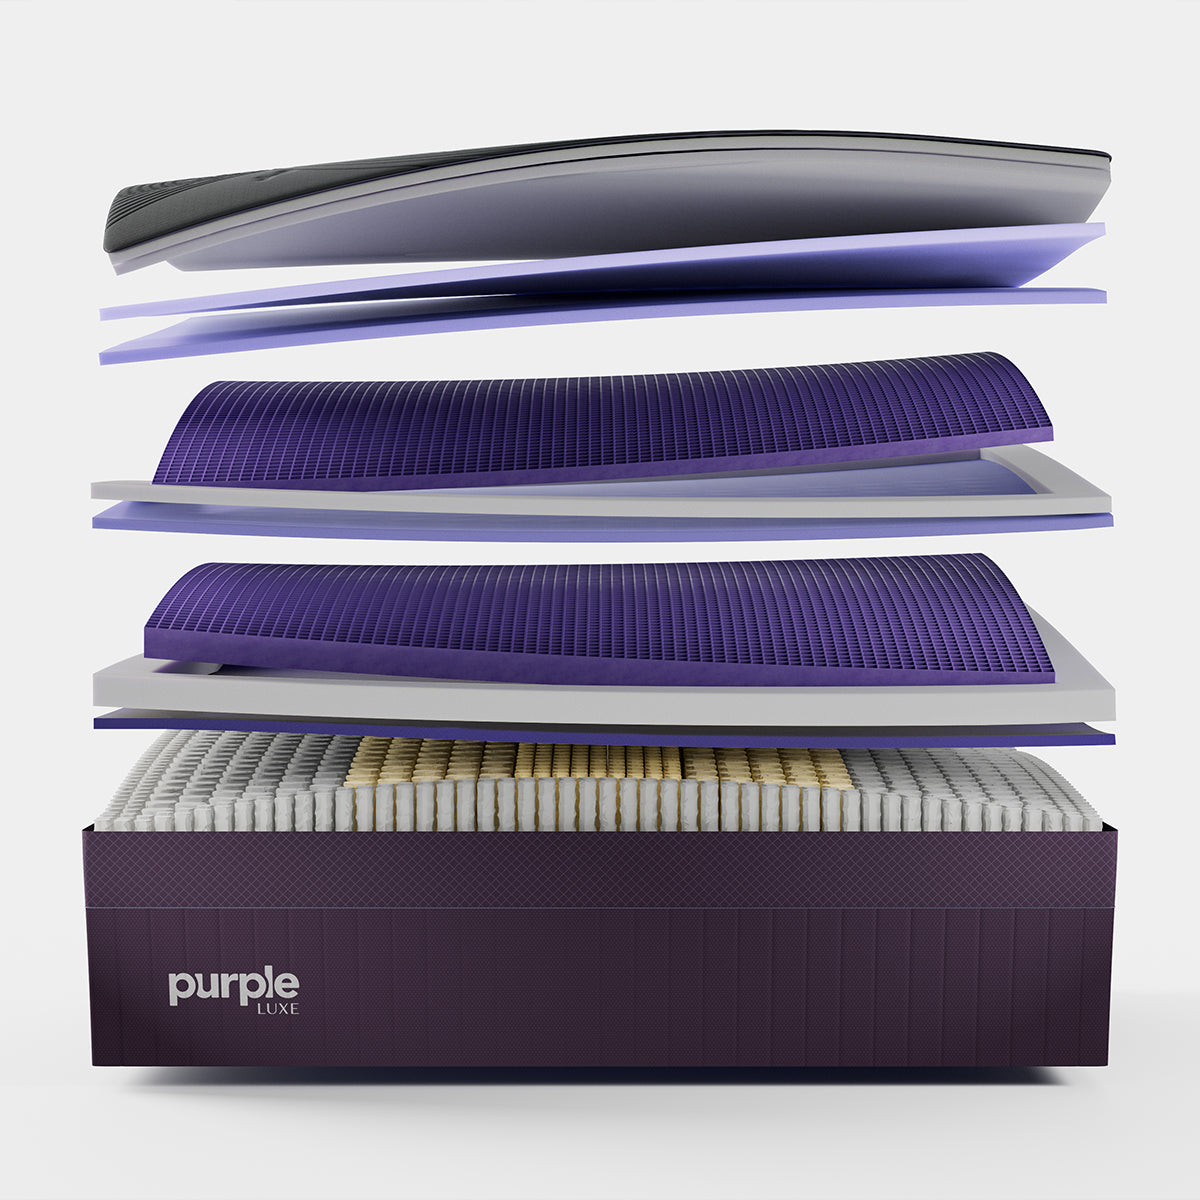 Purple Rejuvenate Premier Mattress layer cutaway